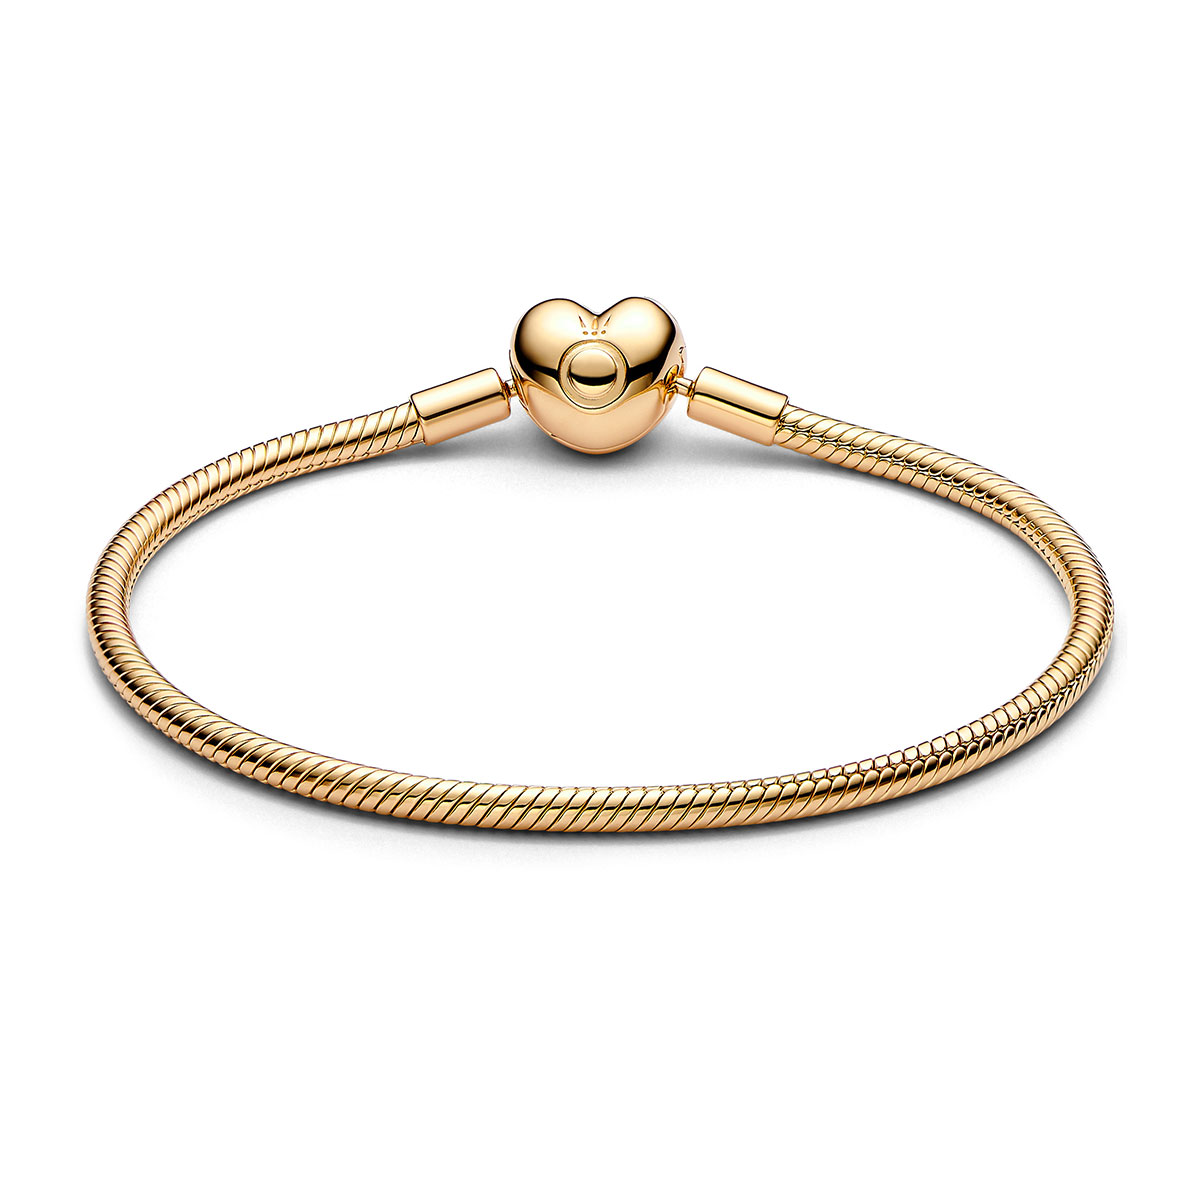 Pandora Moments Heart Clasp Snake Chain Bracelet